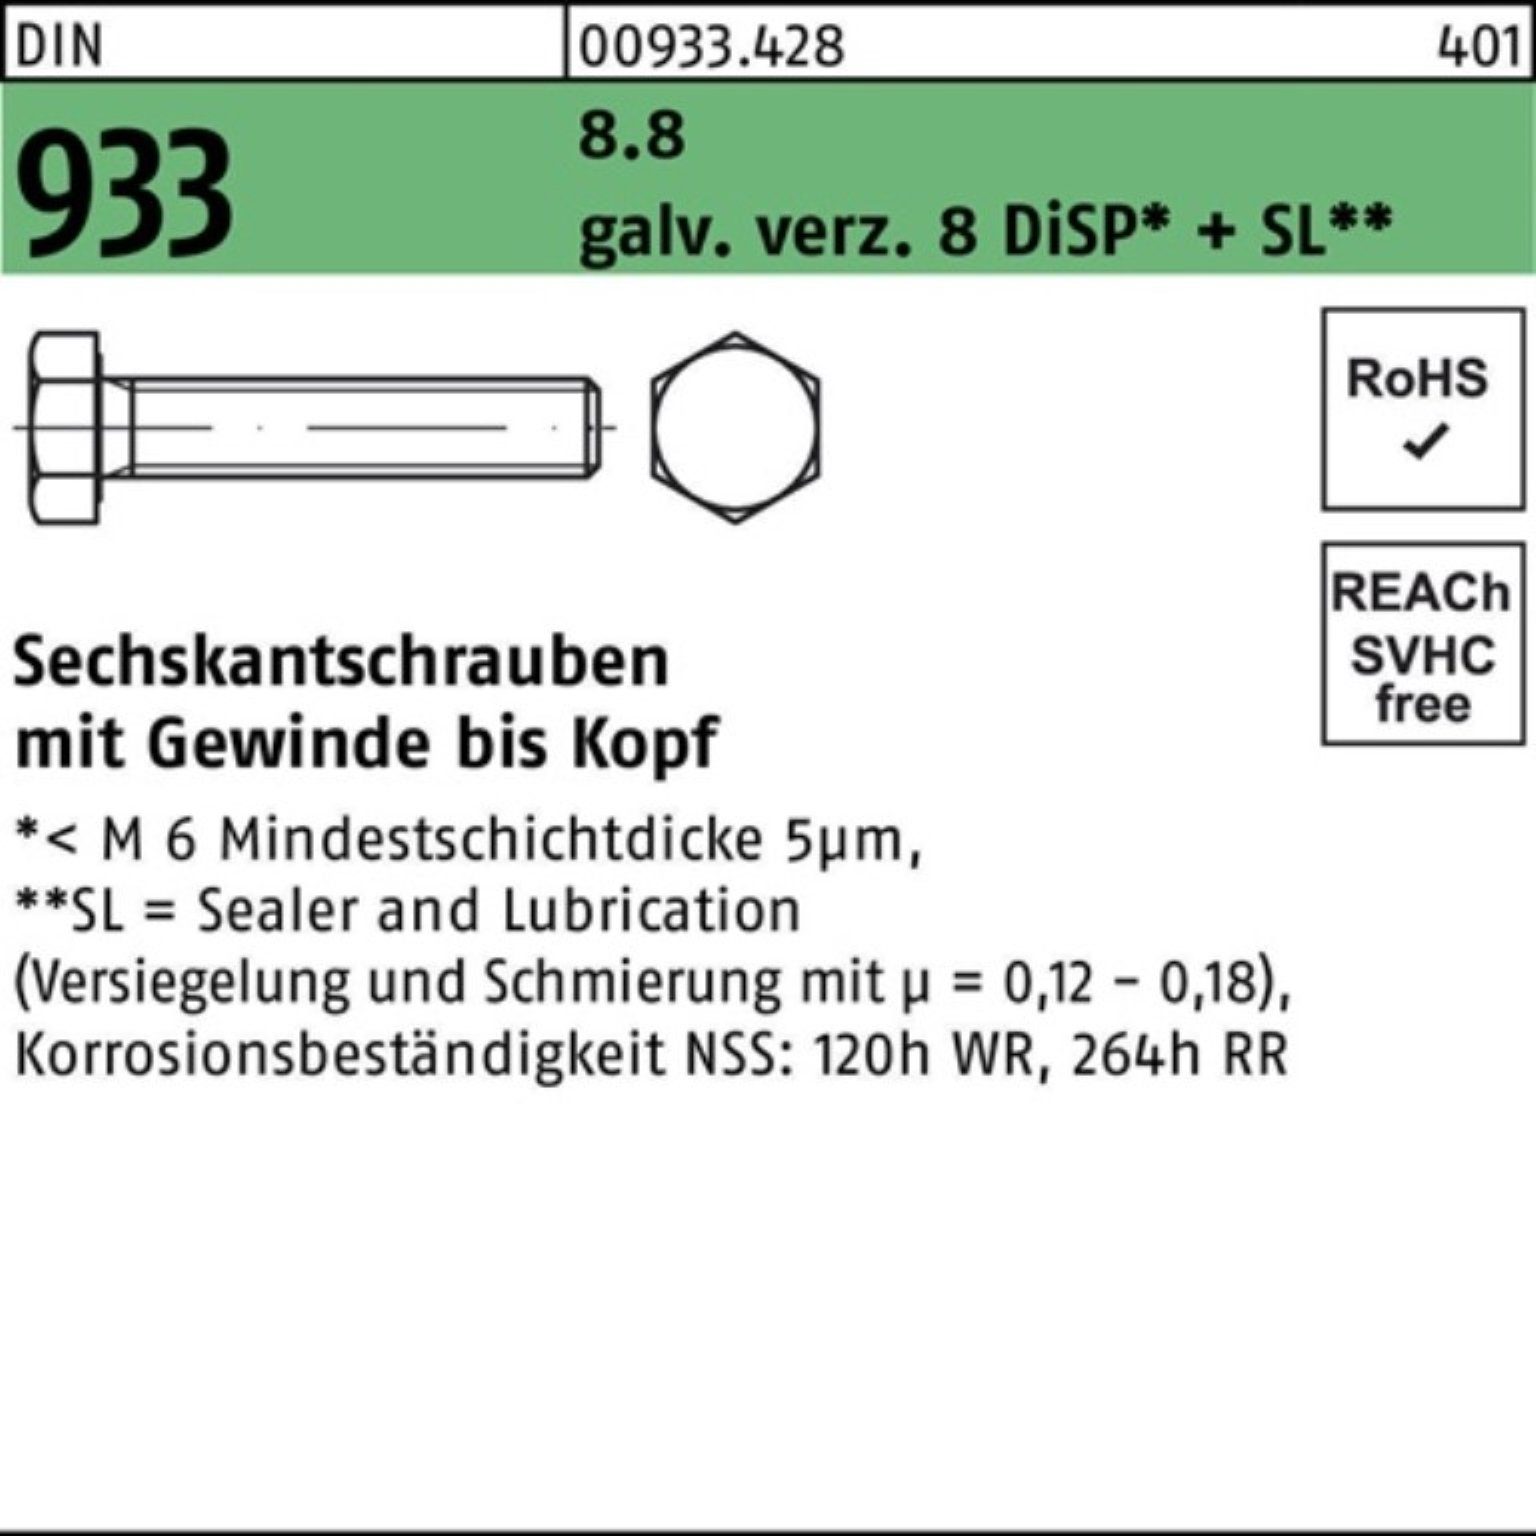 Reyher Sechskantschraube 100er Pack Sechskantschraube DIN 933 VG M30x 100 8.8 gal Zn 8 DiSP + S